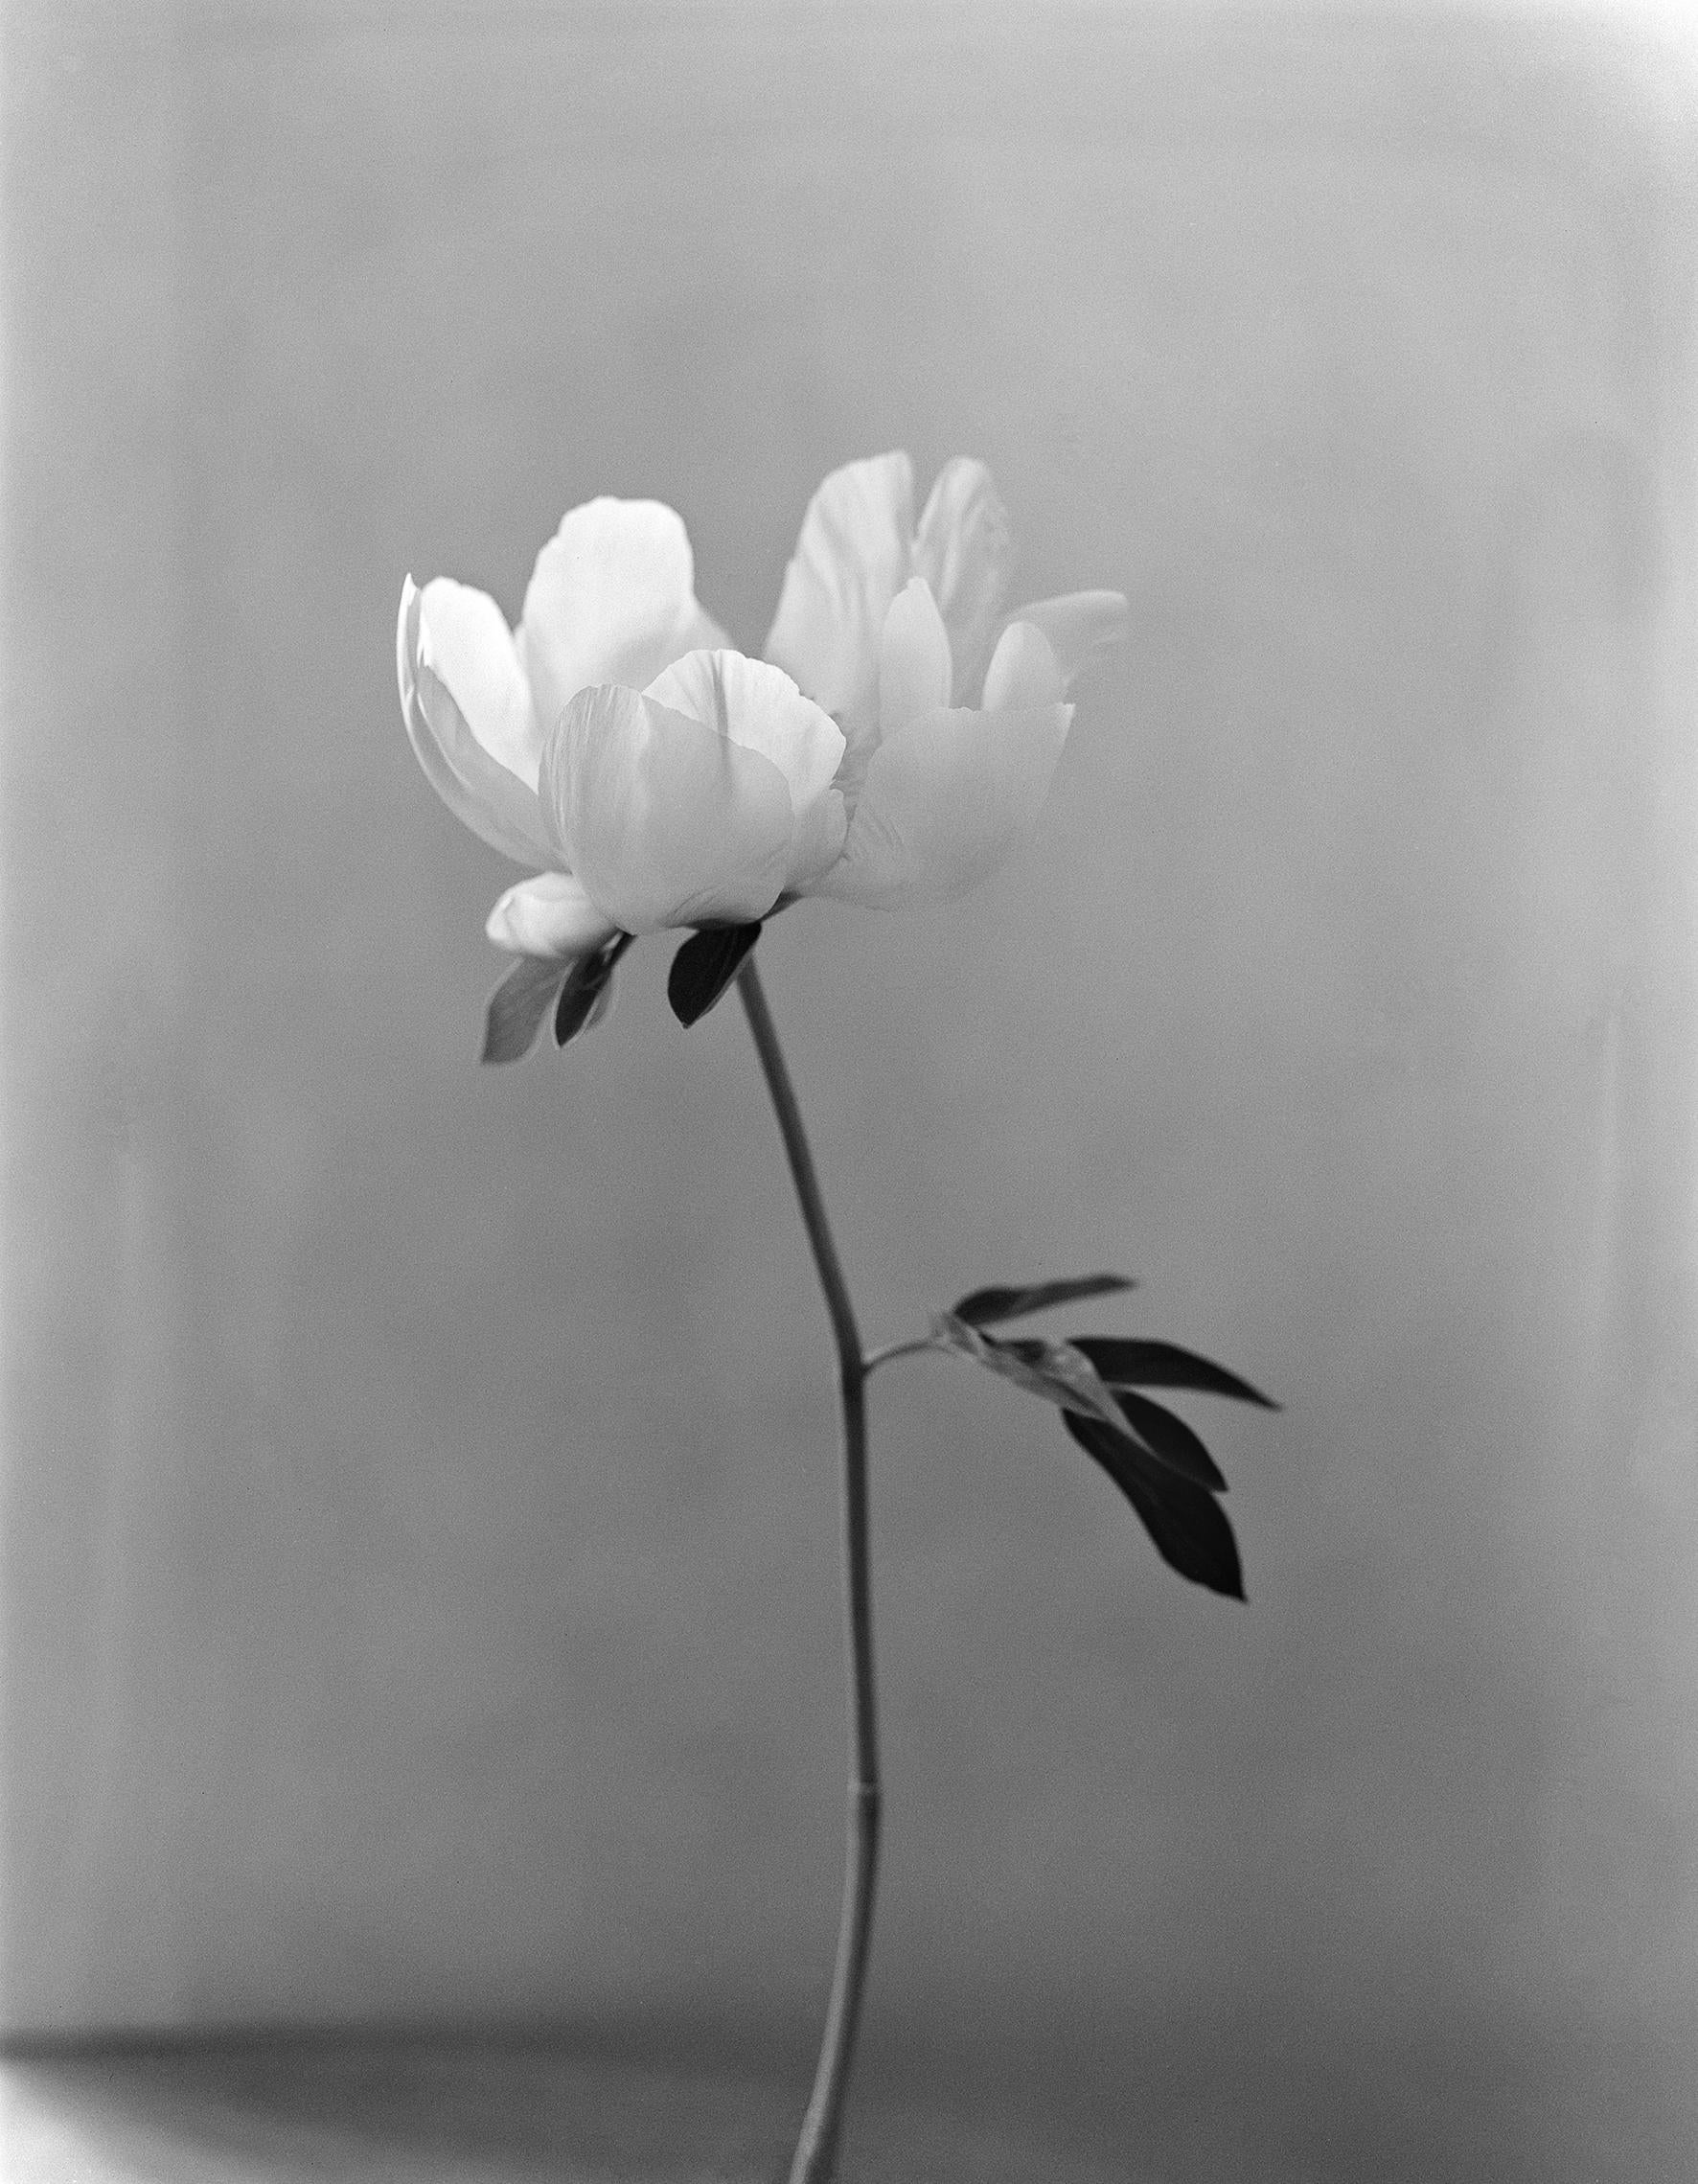 Ugne Pouwell Black and White Photograph - Peony - analogue black and white floral photography, Limited Editon of 10